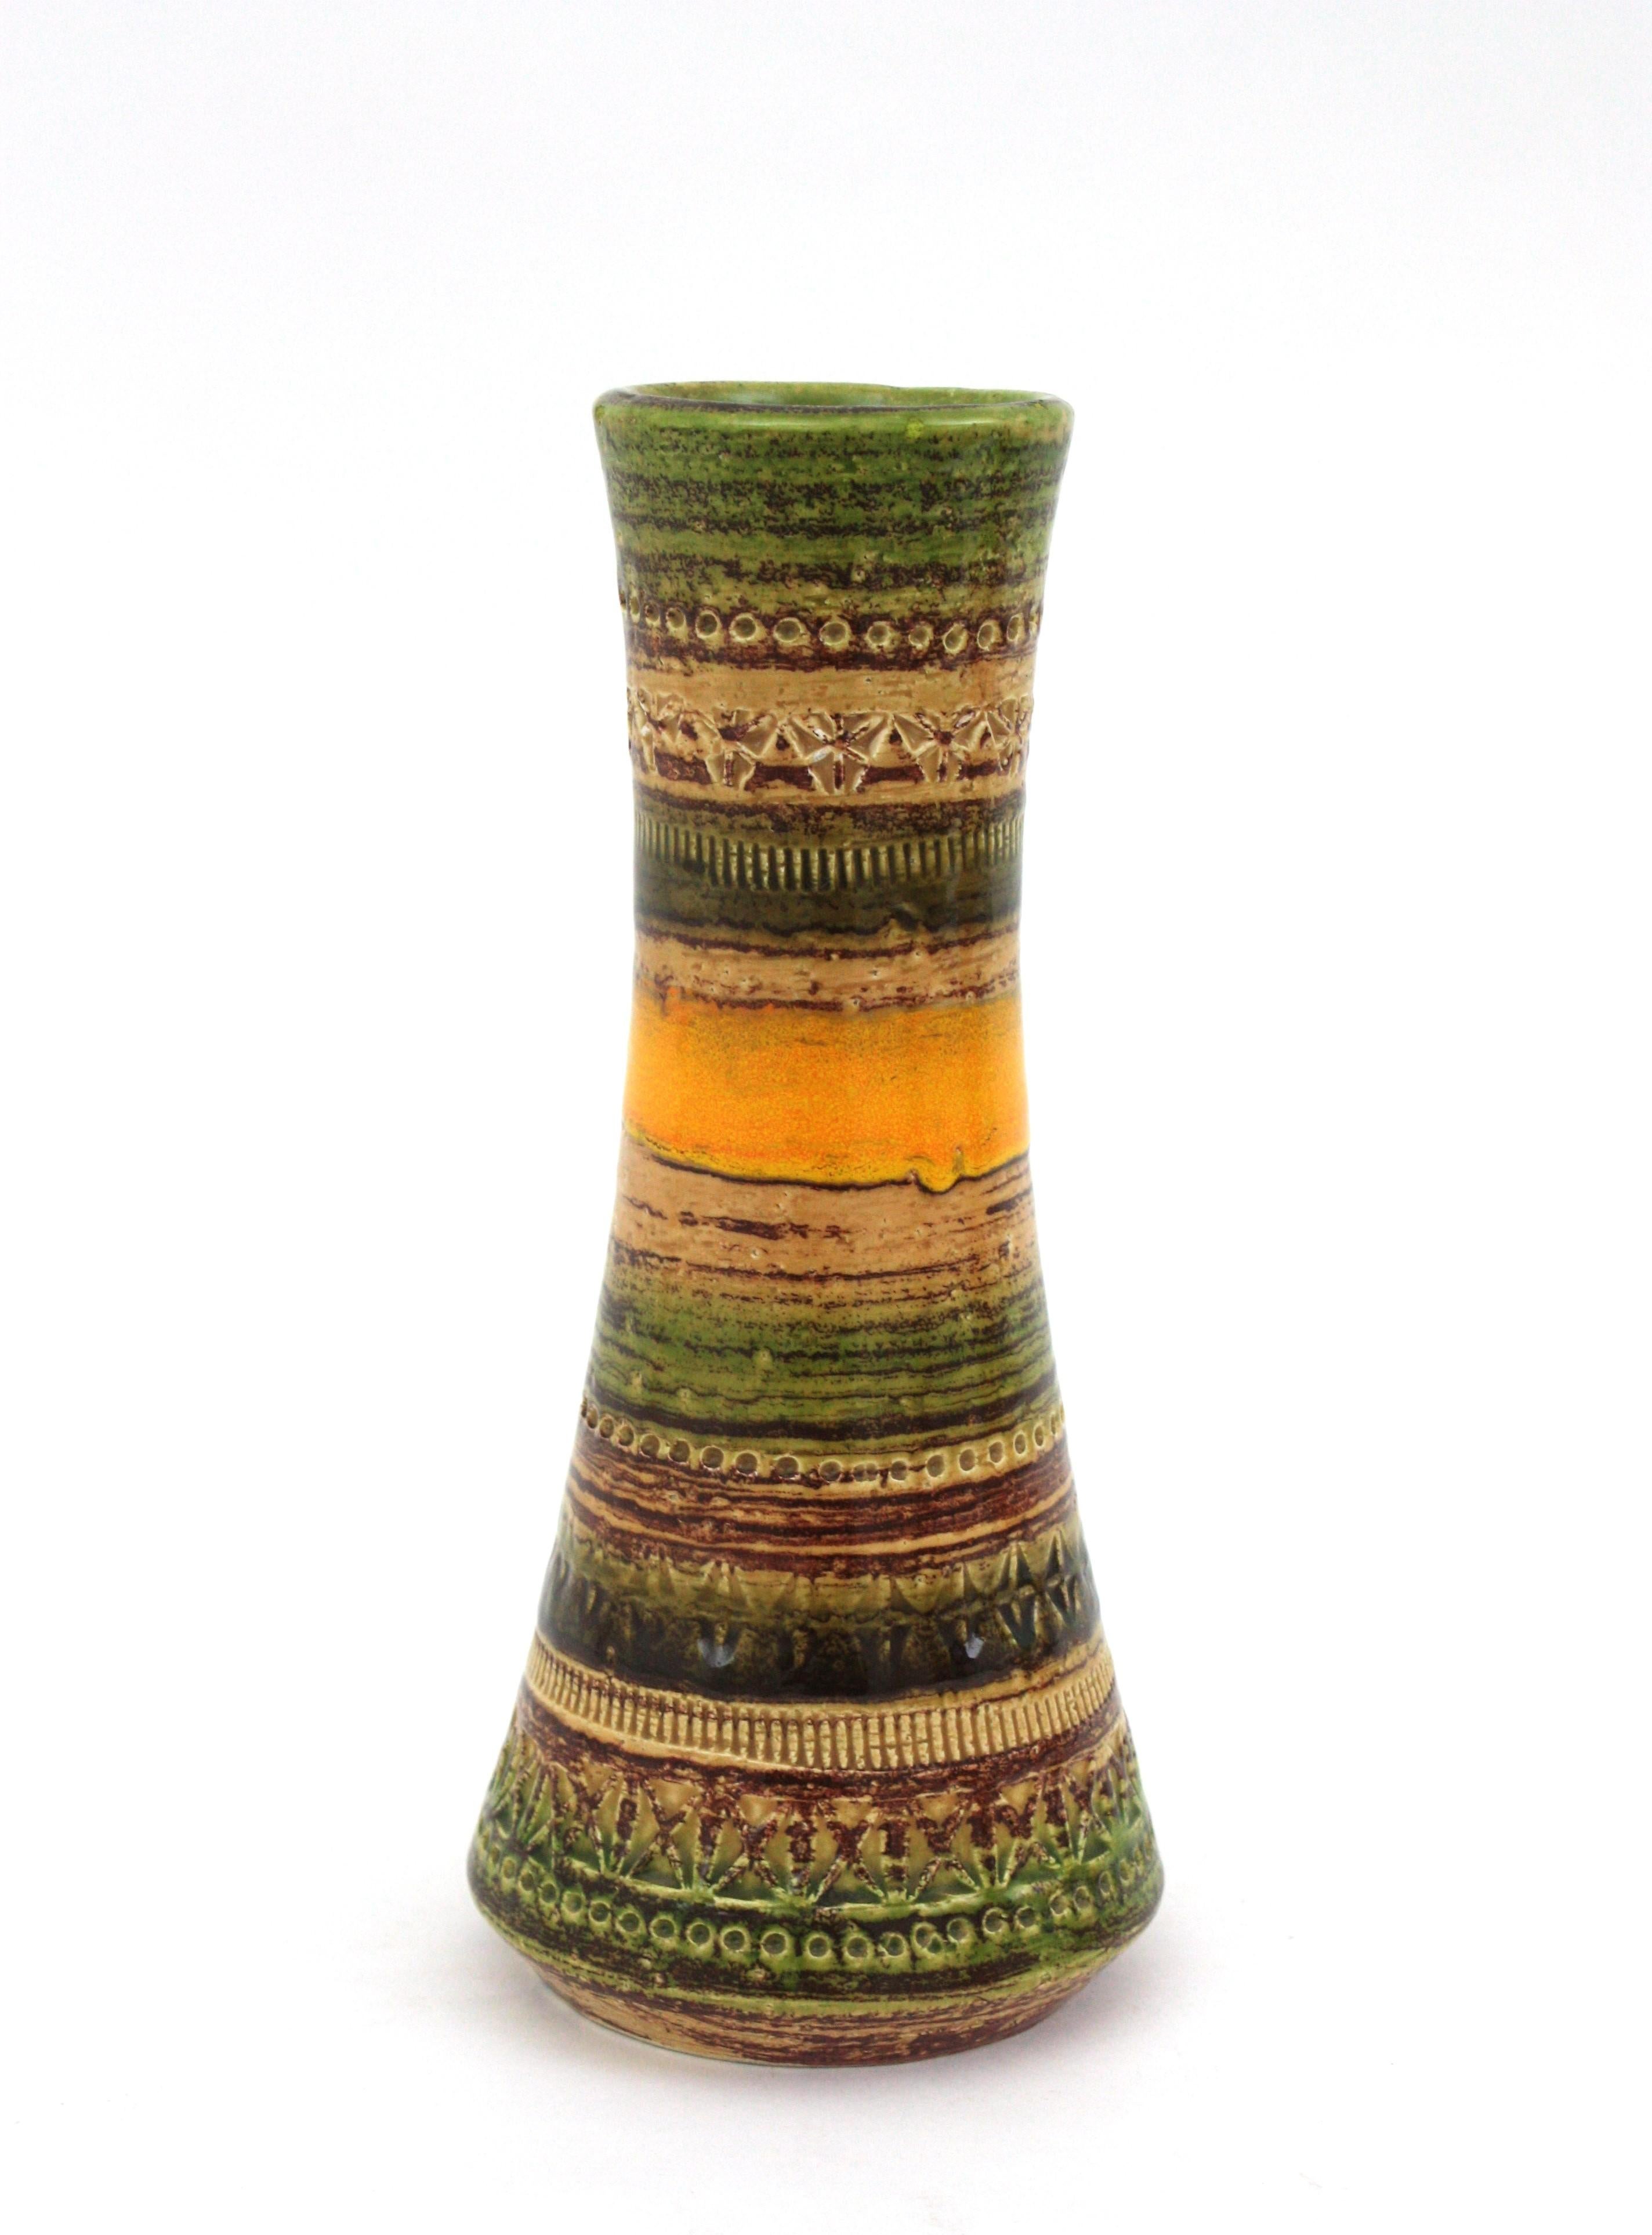 Bitossi Sahara Aldo Londi Cer Paoli glasierte Keramikvasen, Italien, 1960er Jahre im Angebot 2